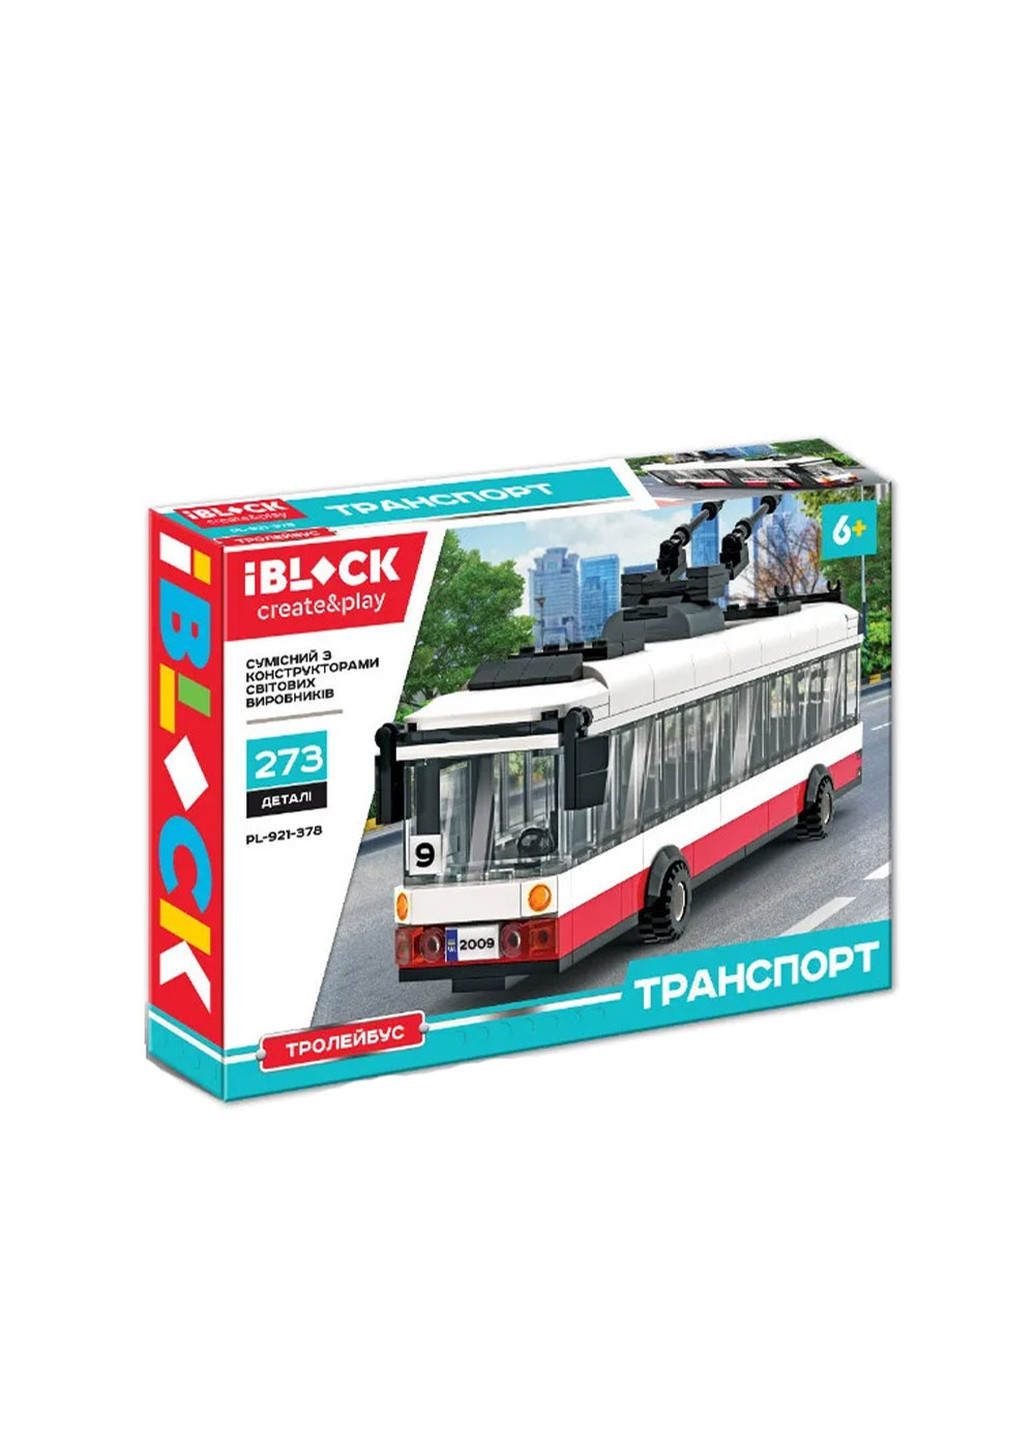 Конструктор Троллейбус Iblock (255597448)